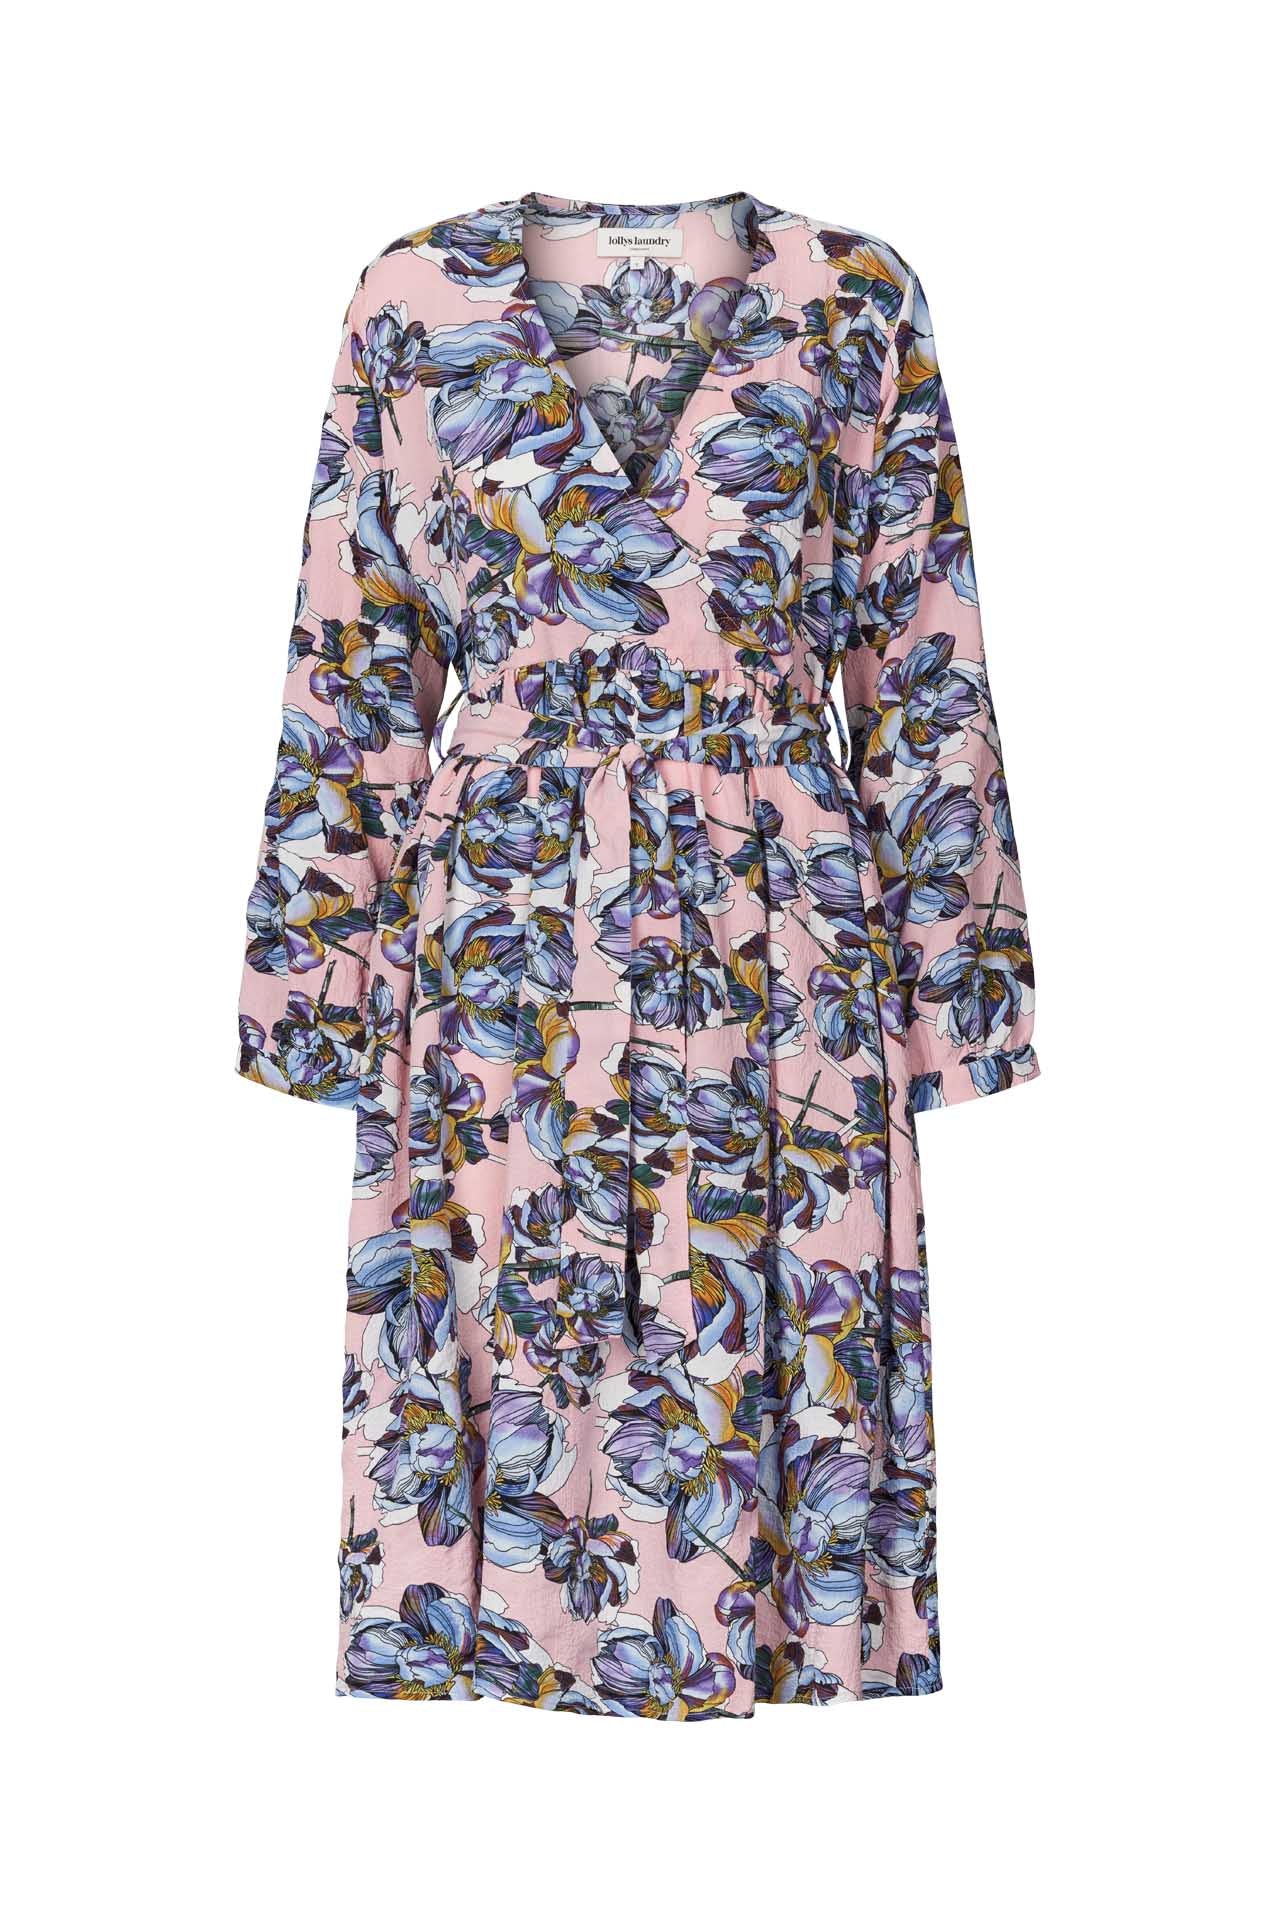 Lollys Laundry Abigail Dress - Pink/Blue Flower Print